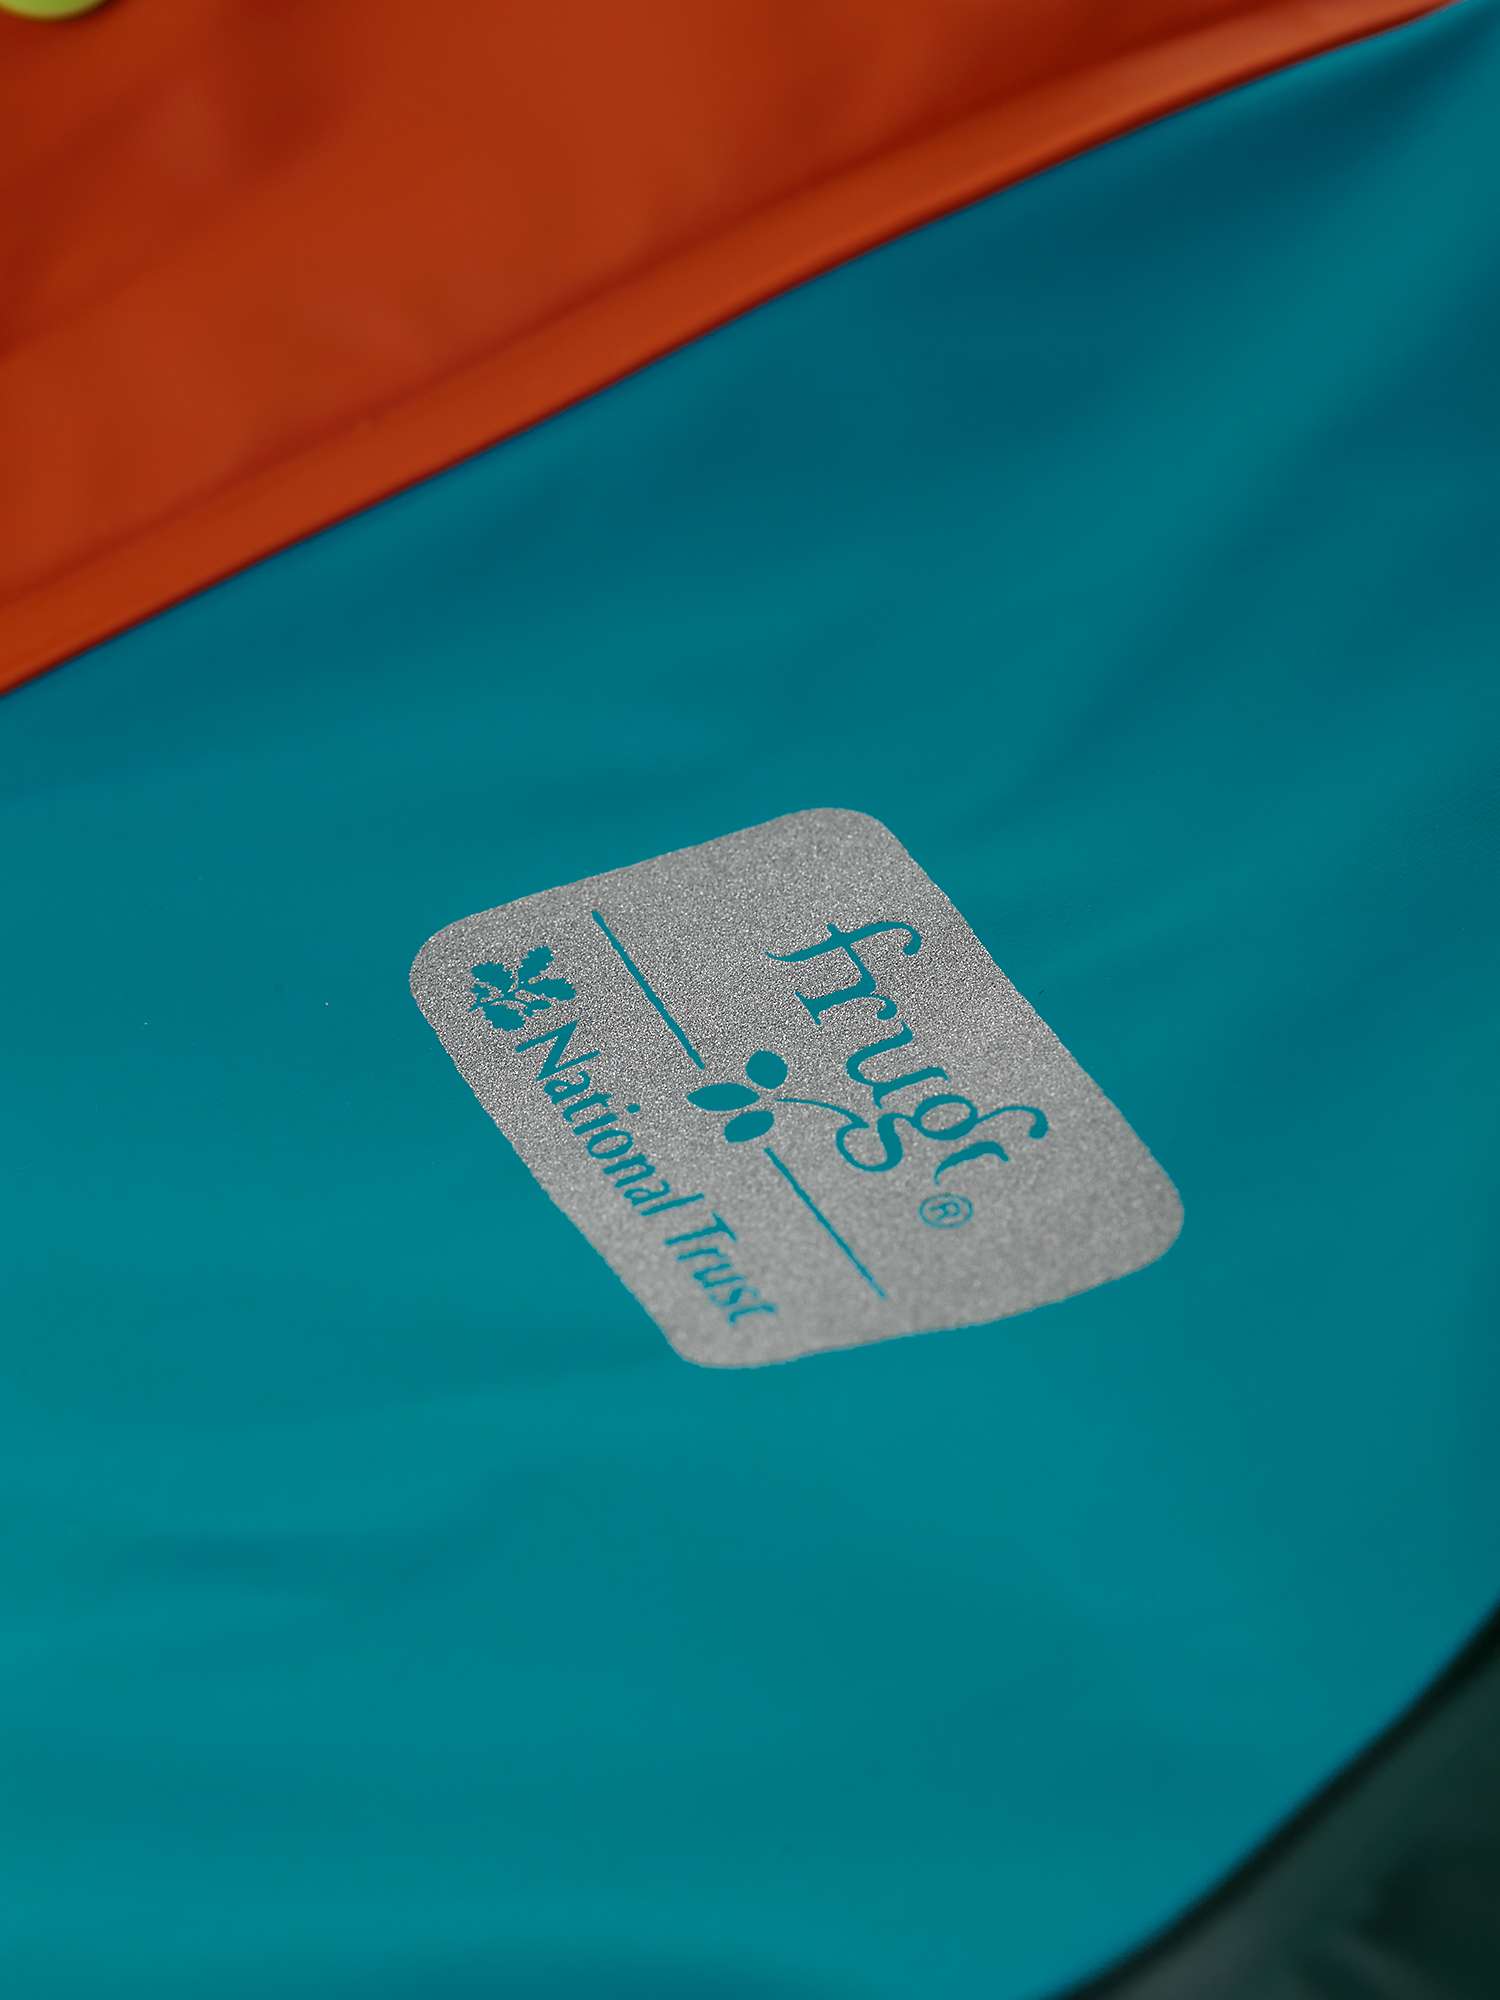 Buy Frugi Kids' The National Trust Puddle Buster Waterproof Raincoat, Blue Online at johnlewis.com